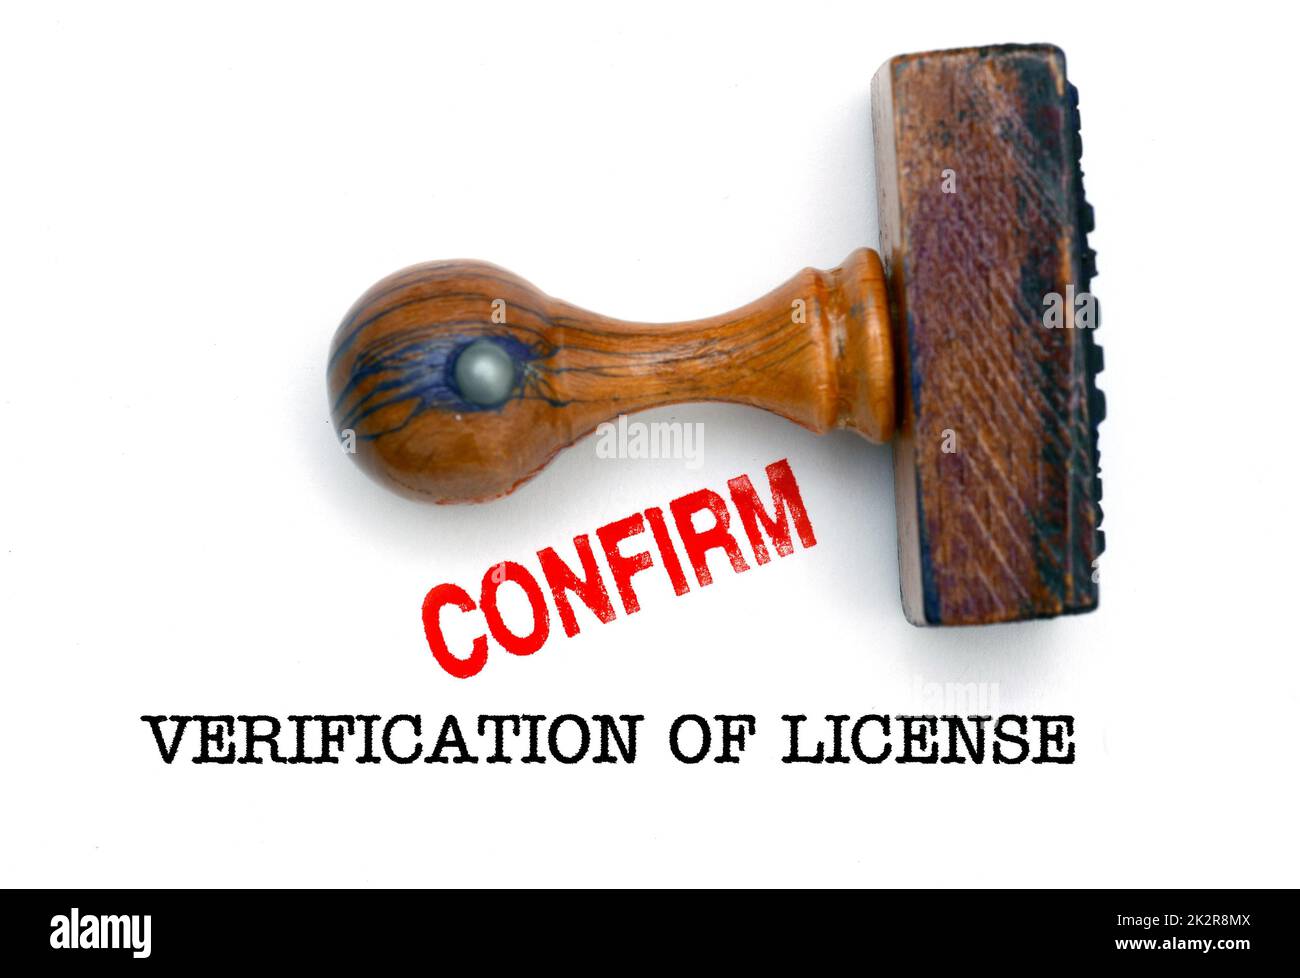 Verification of license Stock Photo